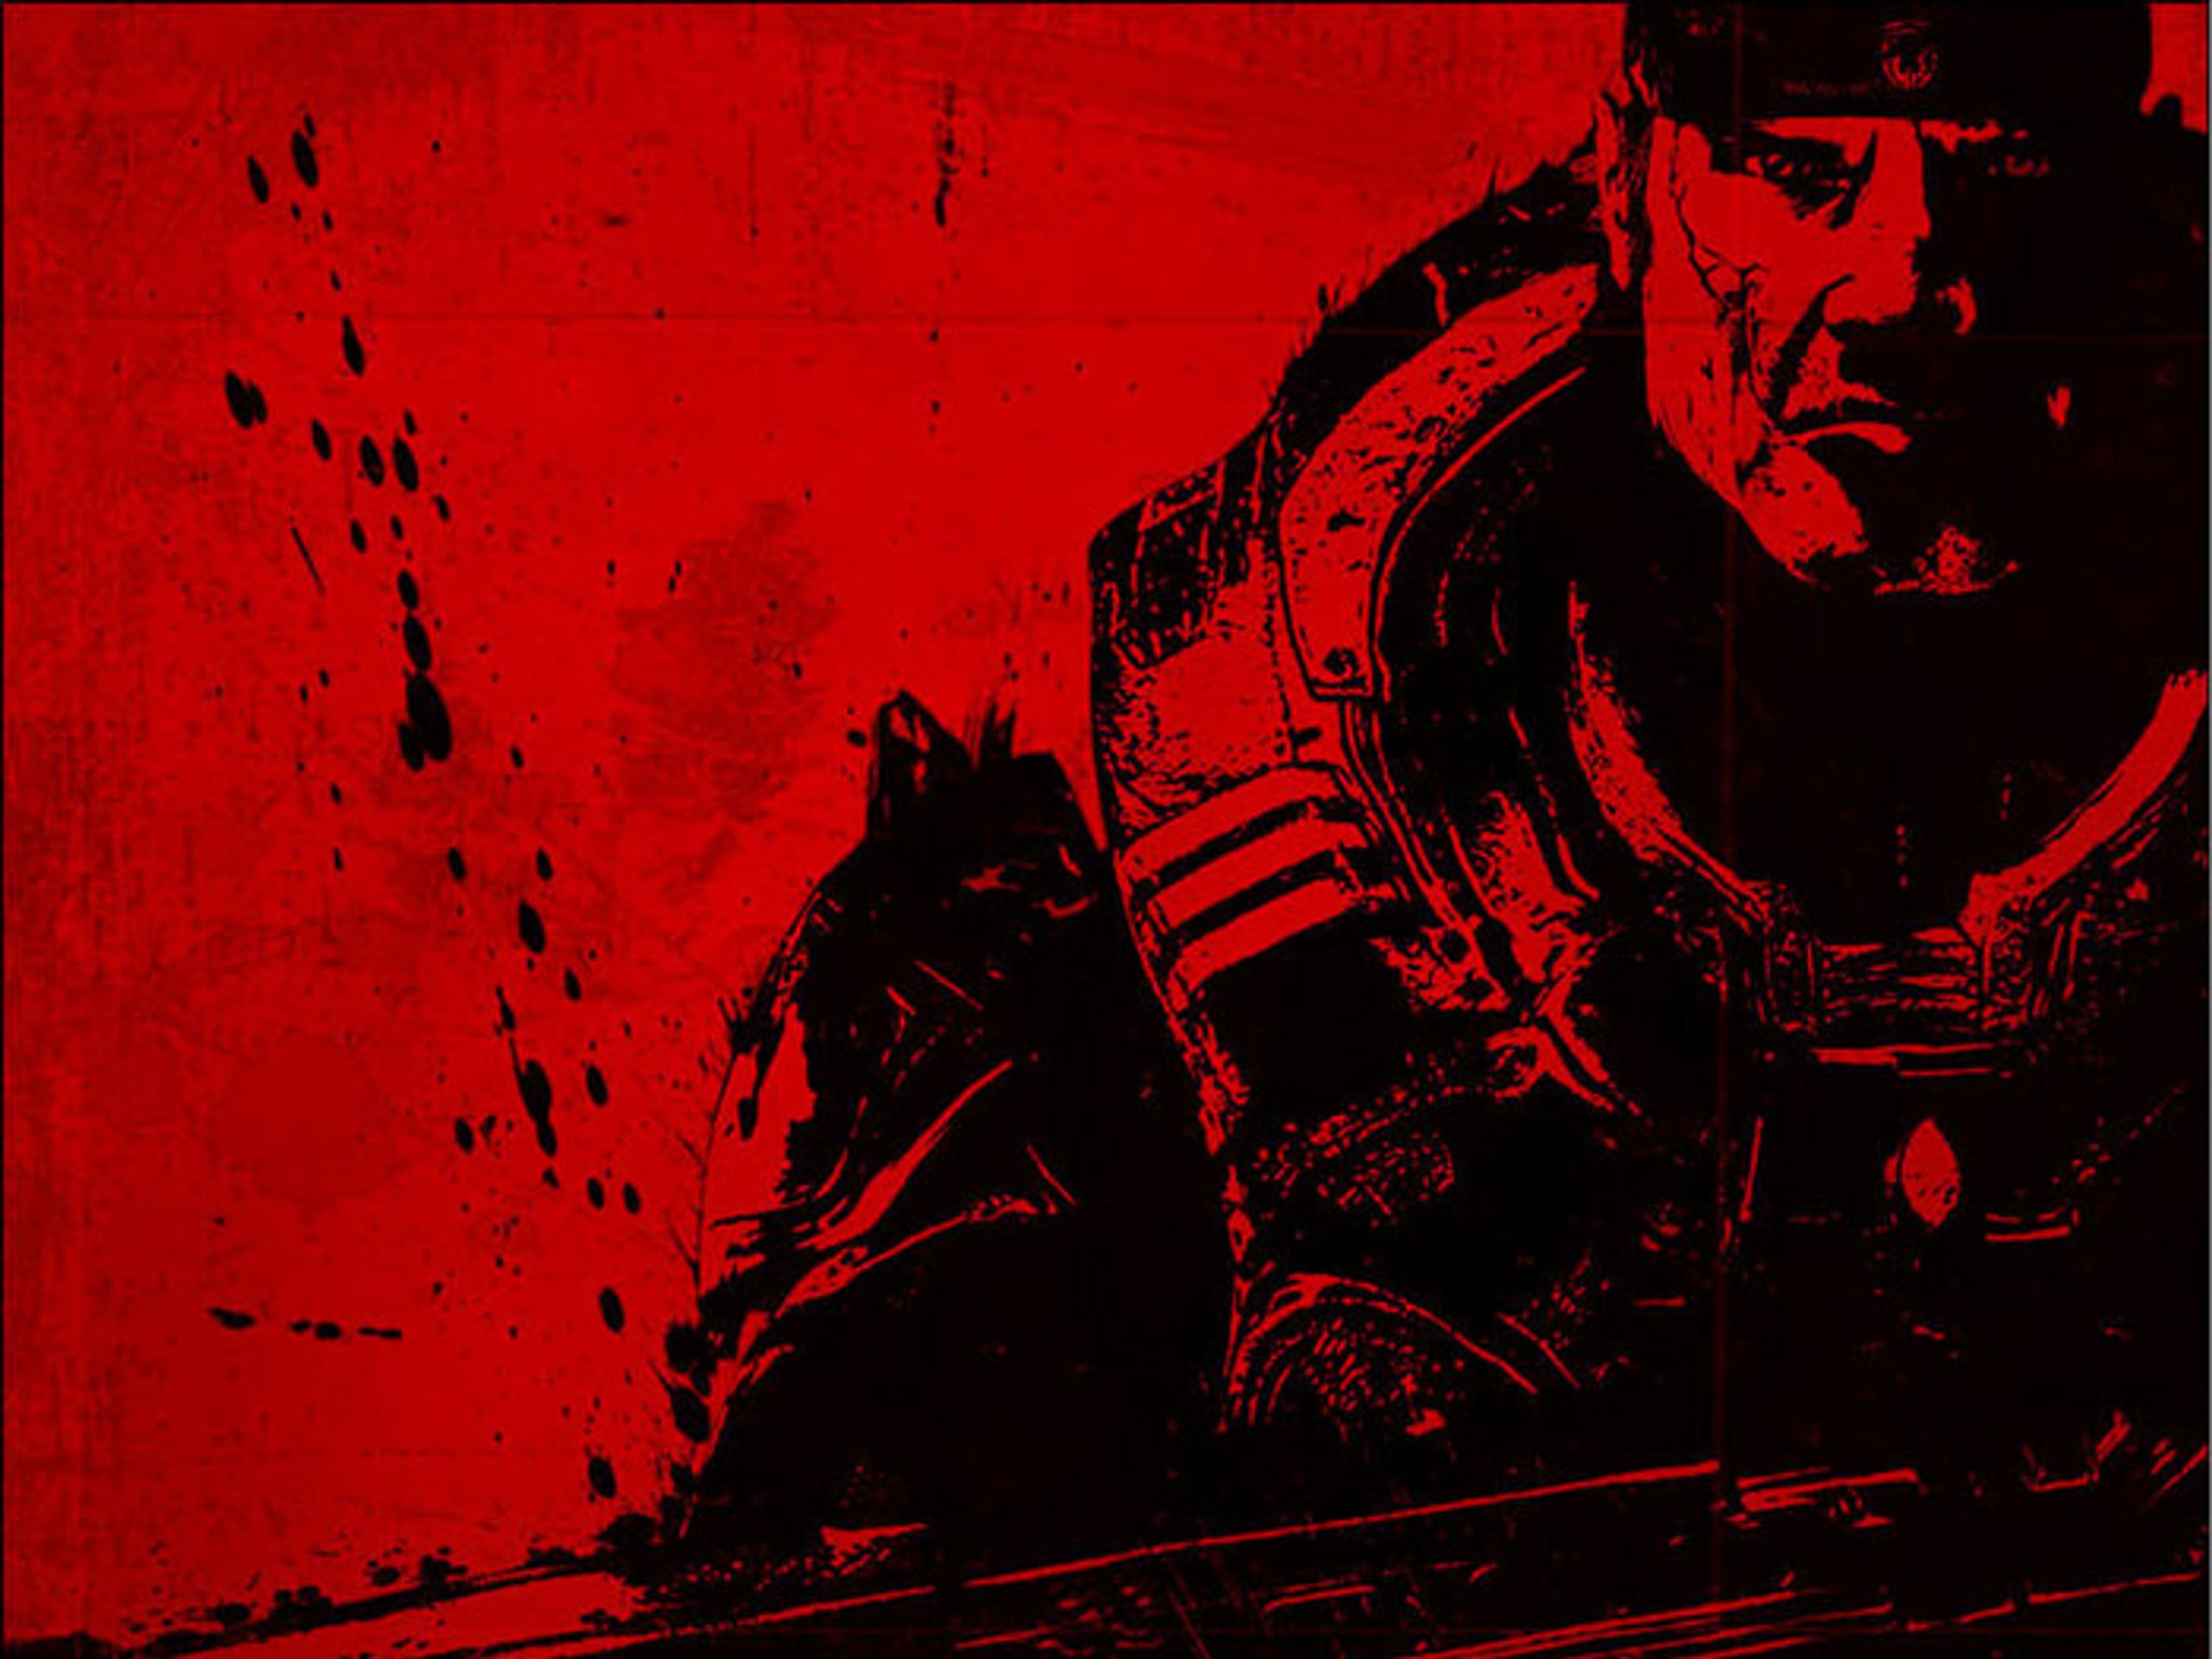 Gears of War 2 - Gears of War 2 galerie (7/8)